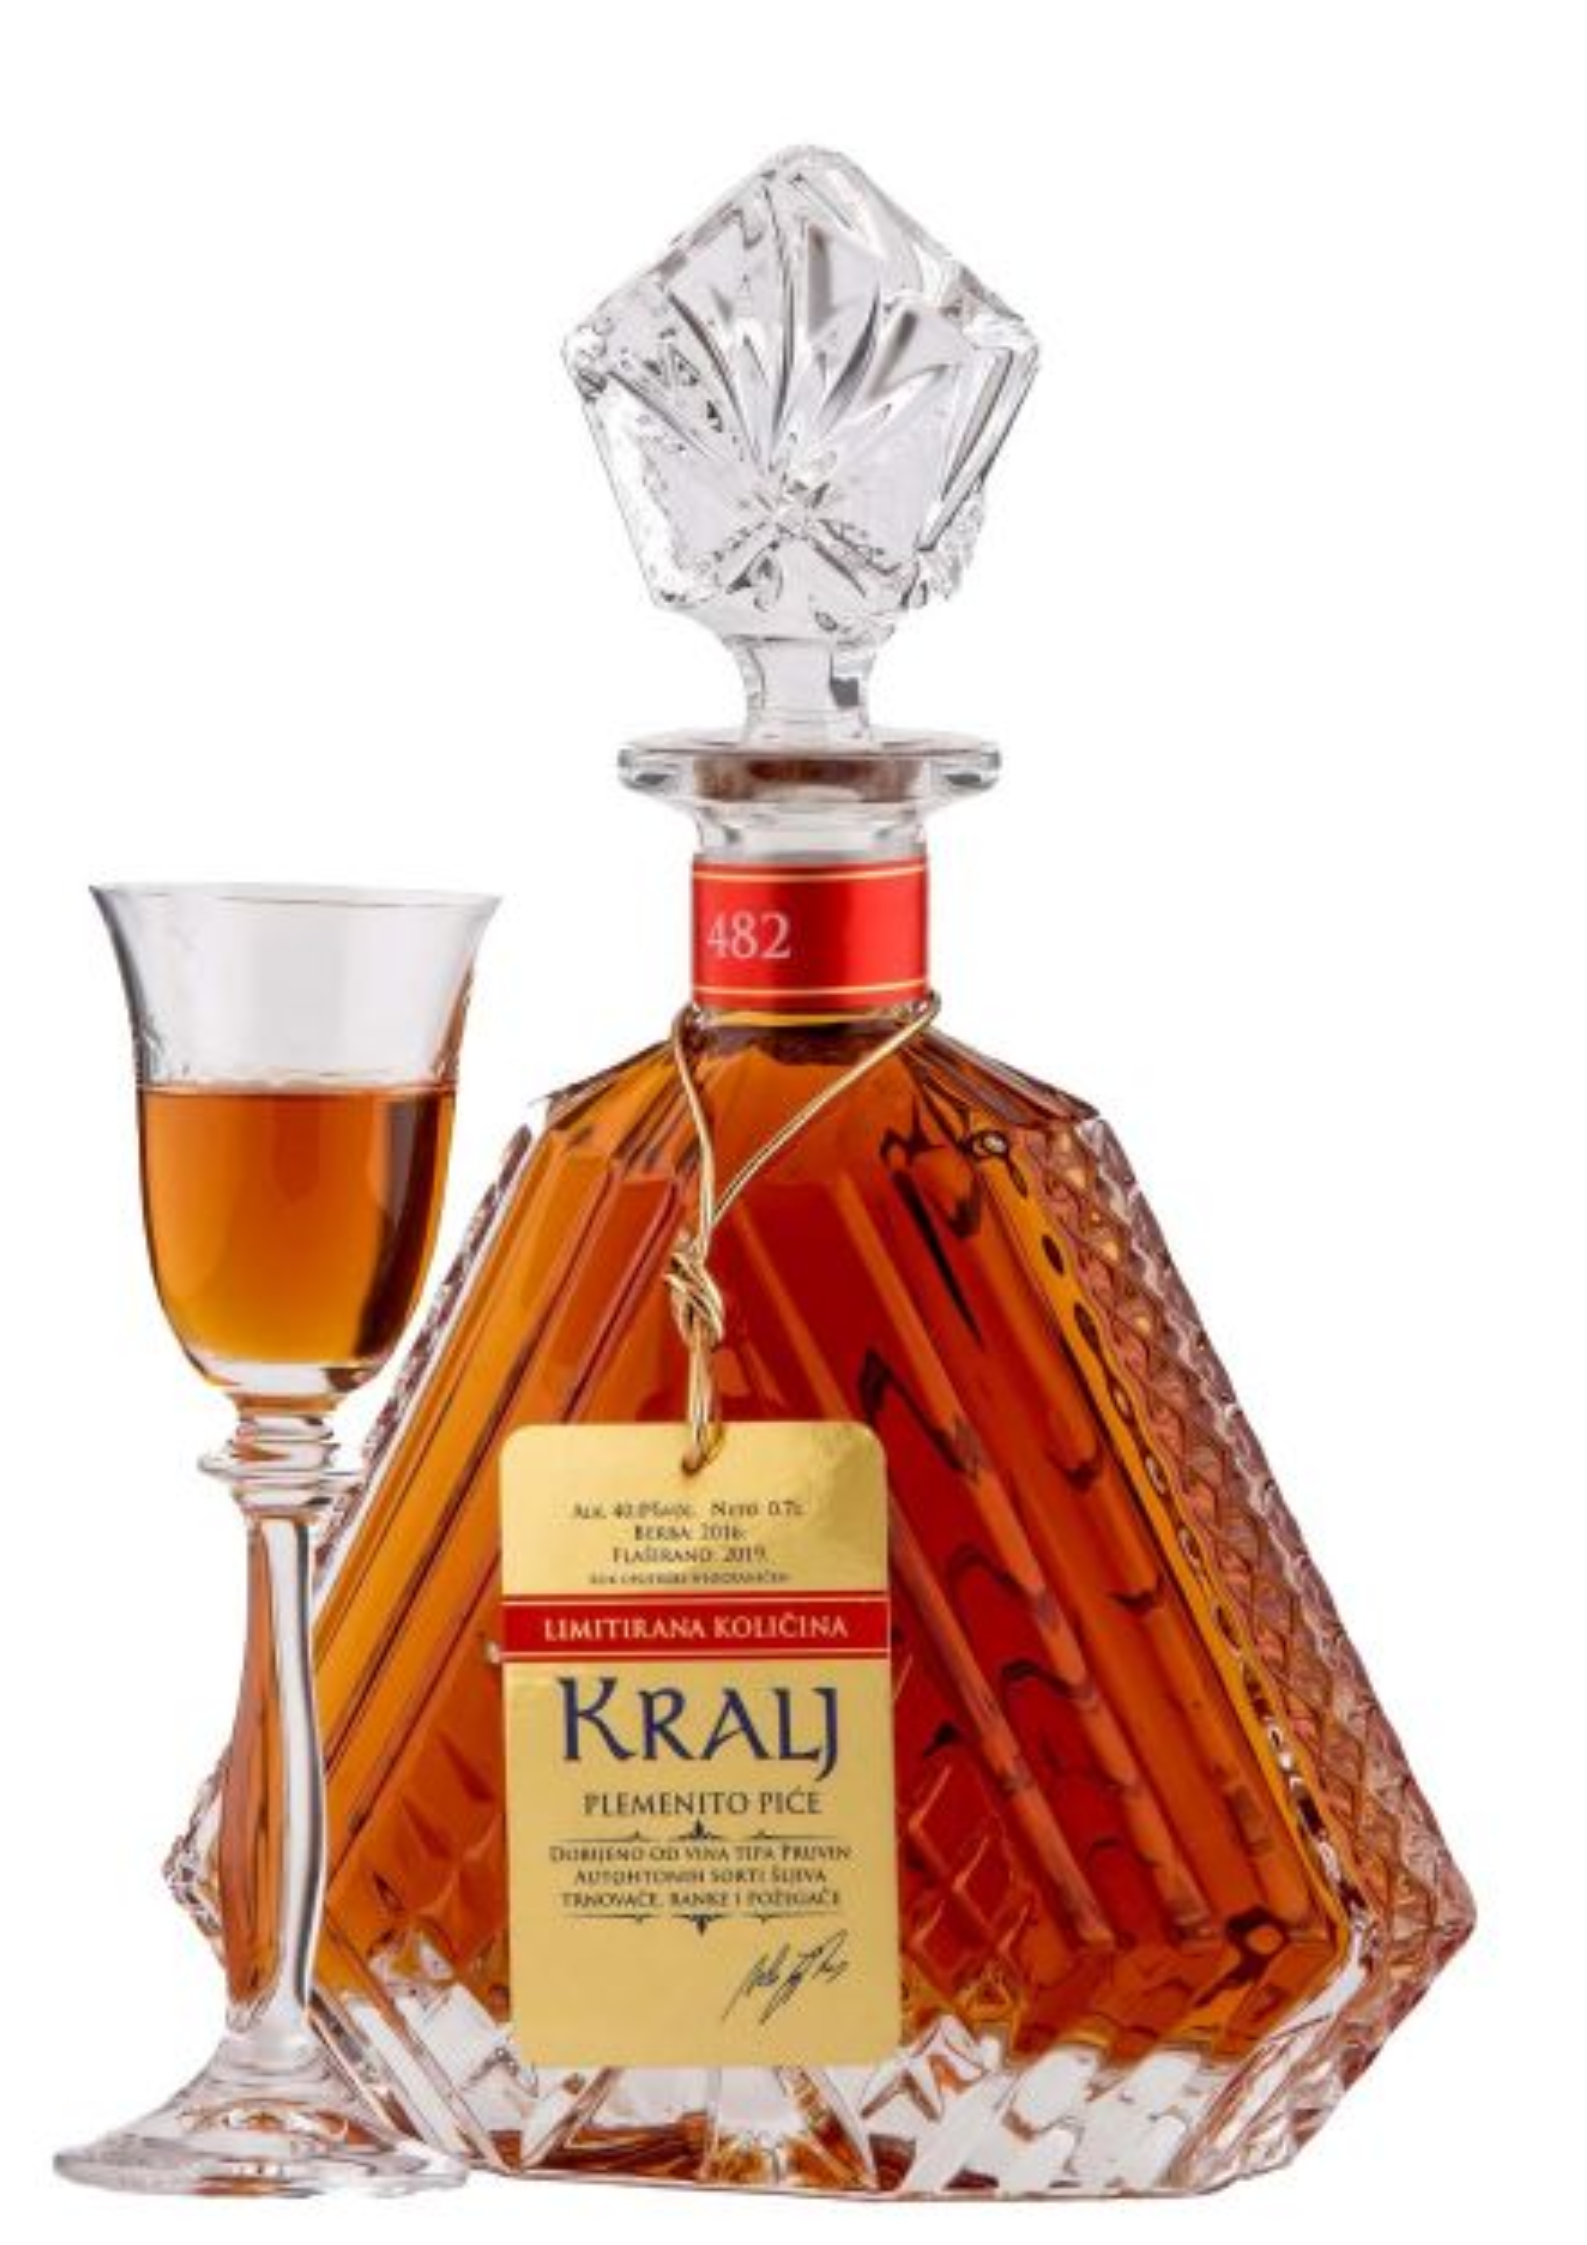 Bottle of Zaric Kralj Serbian Plum Rakija, 40% - The Spirits Room